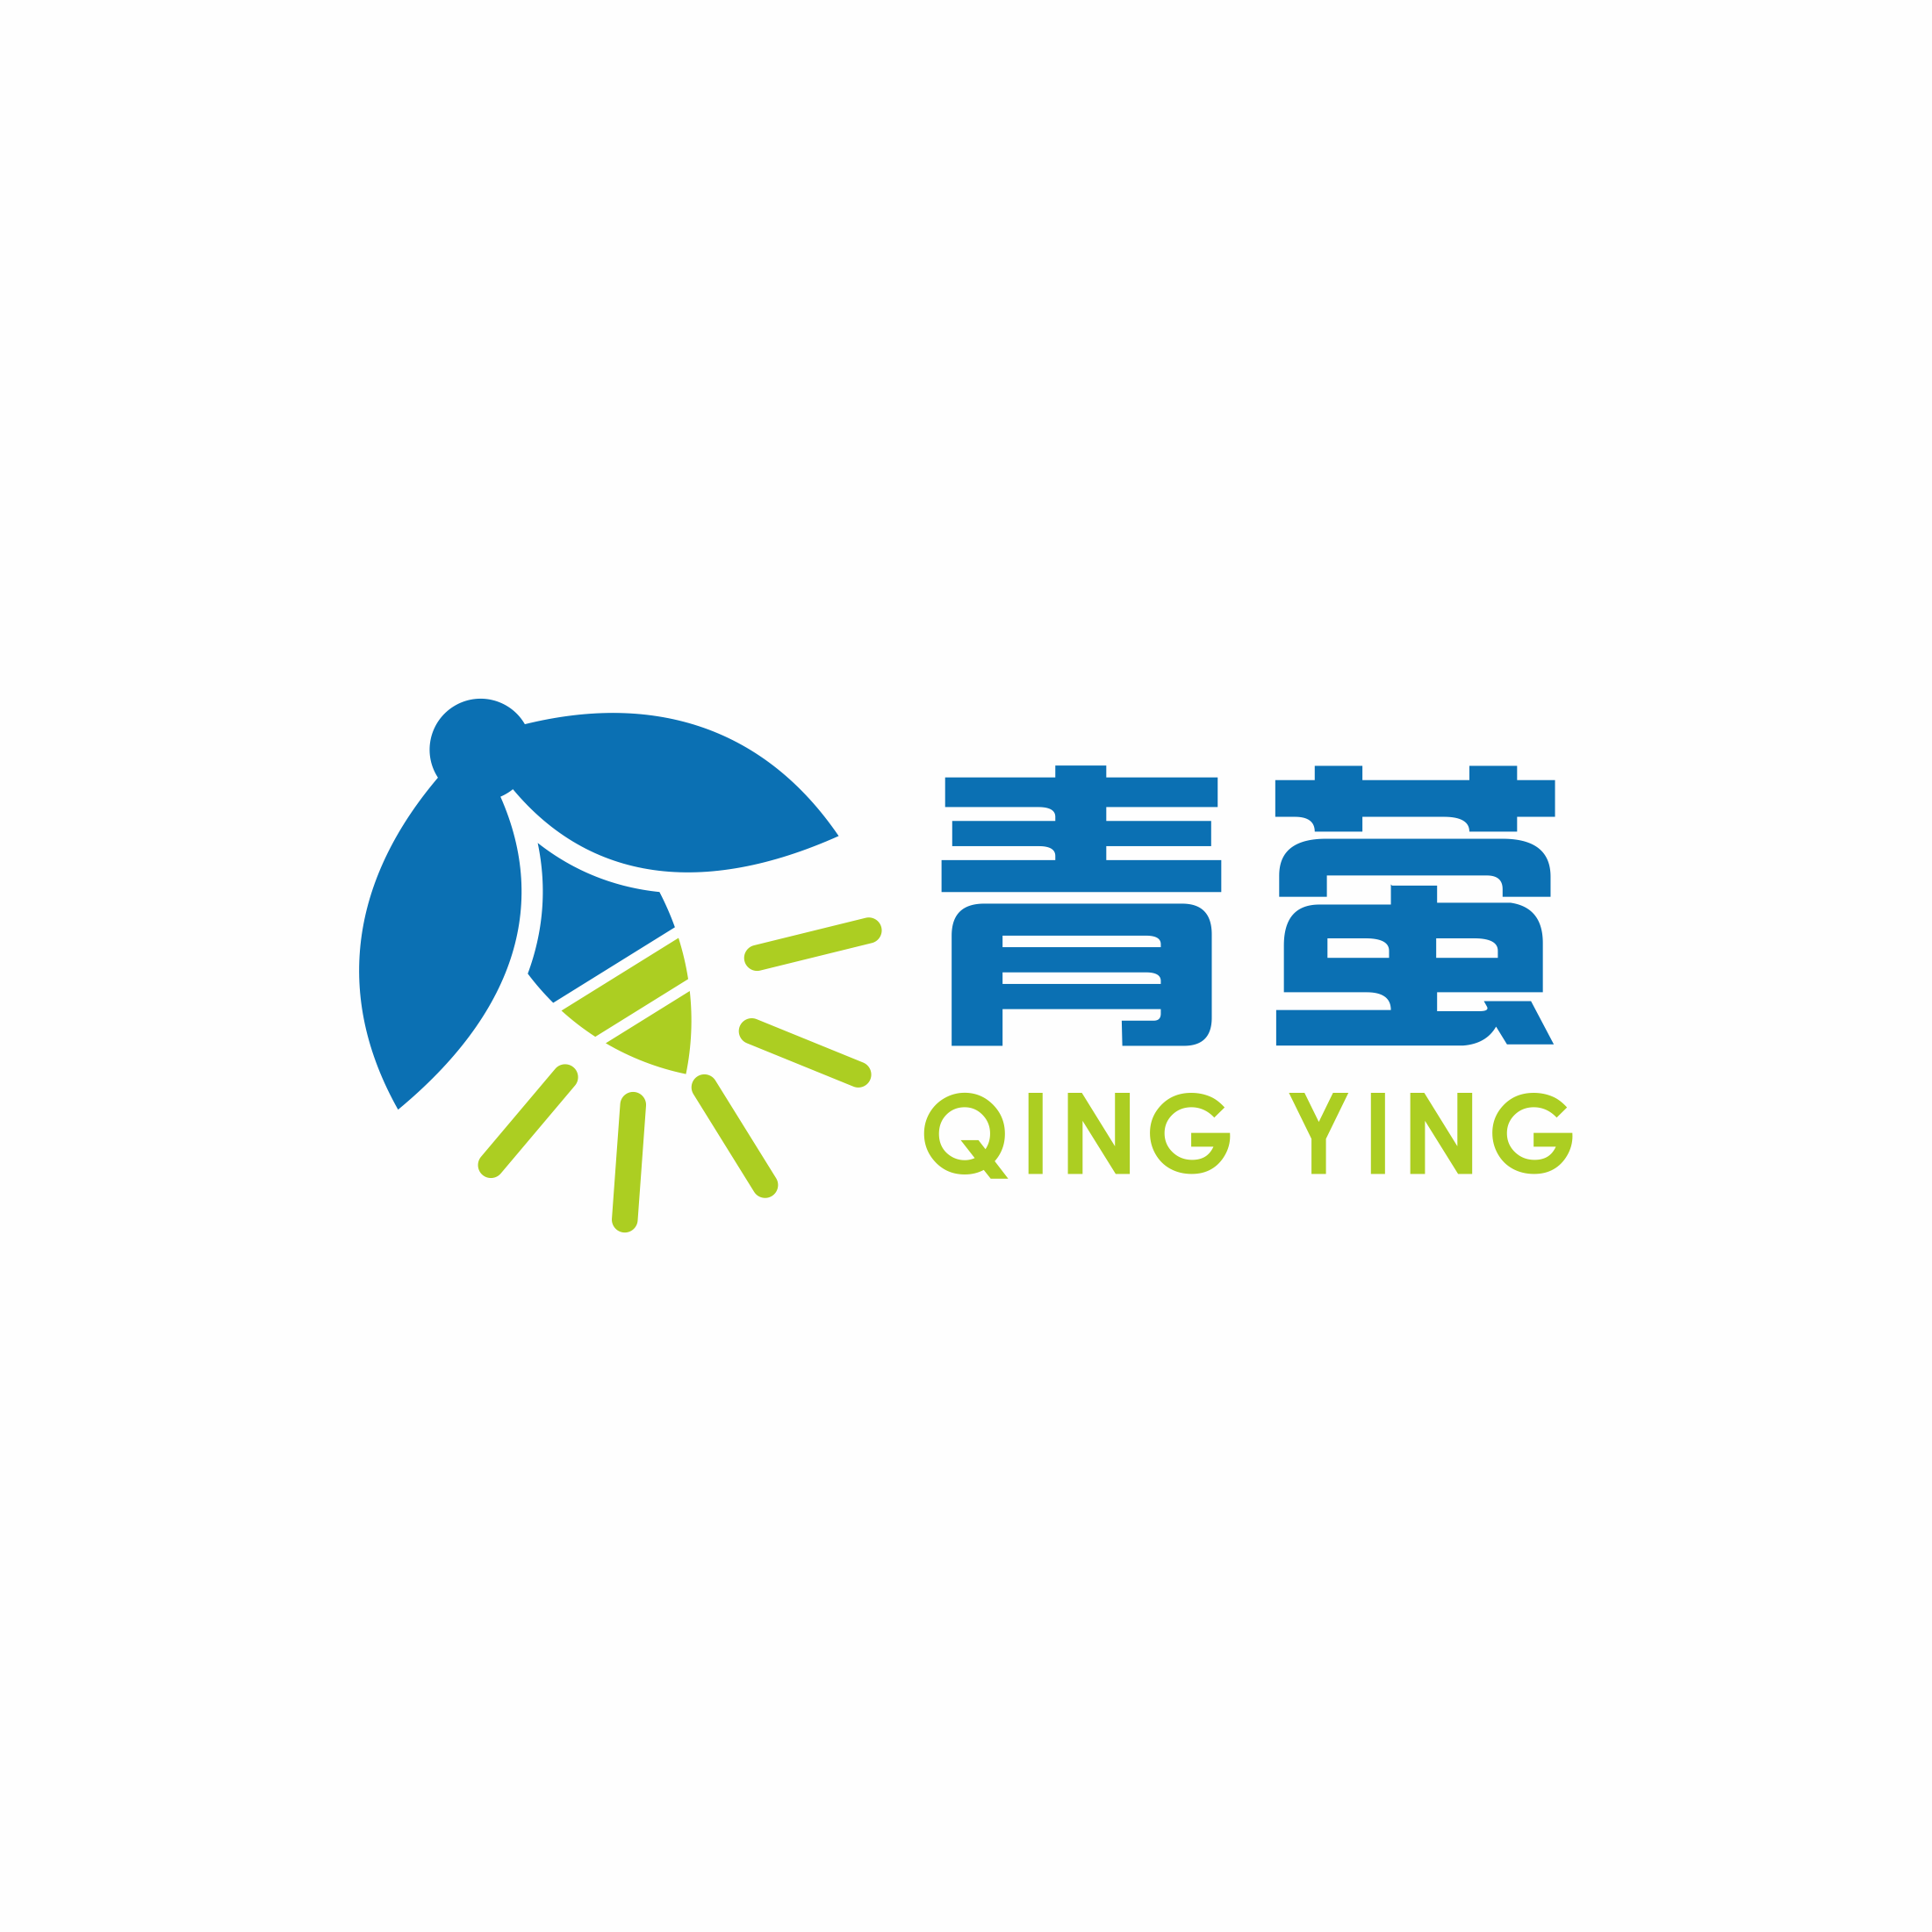 Qingying